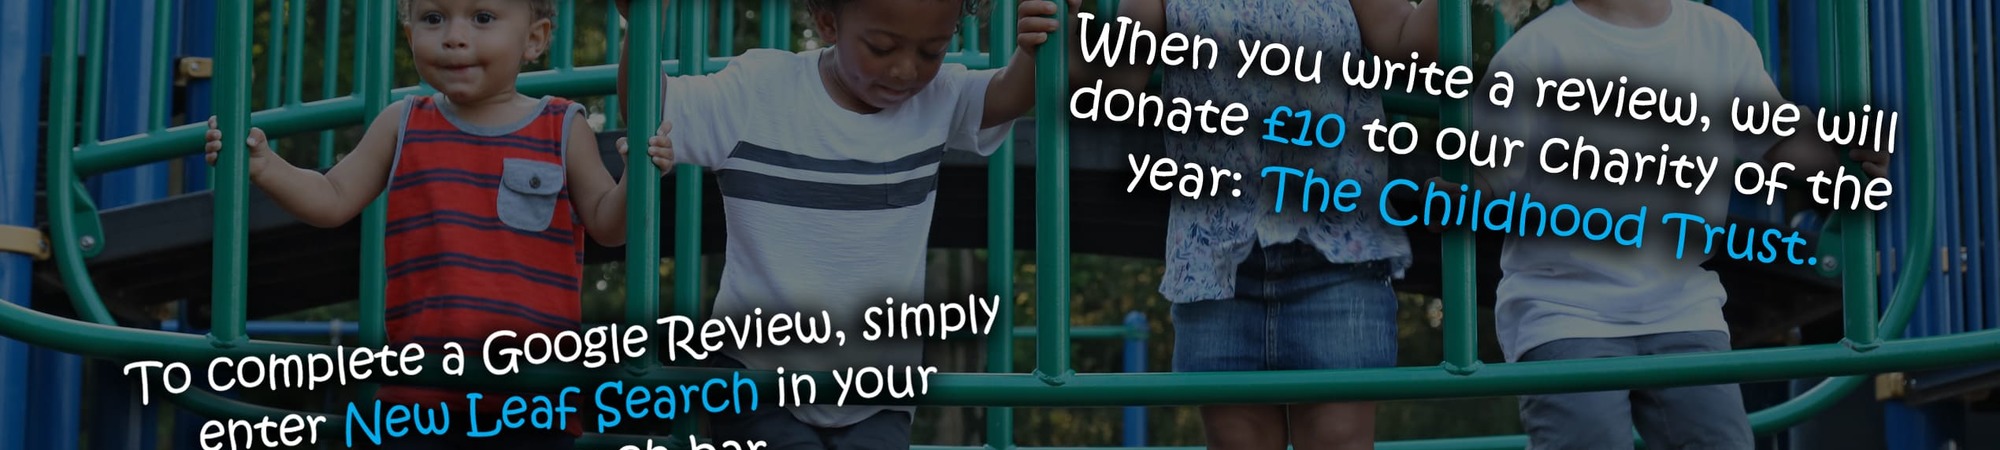 Nls Childhood Trust Donations